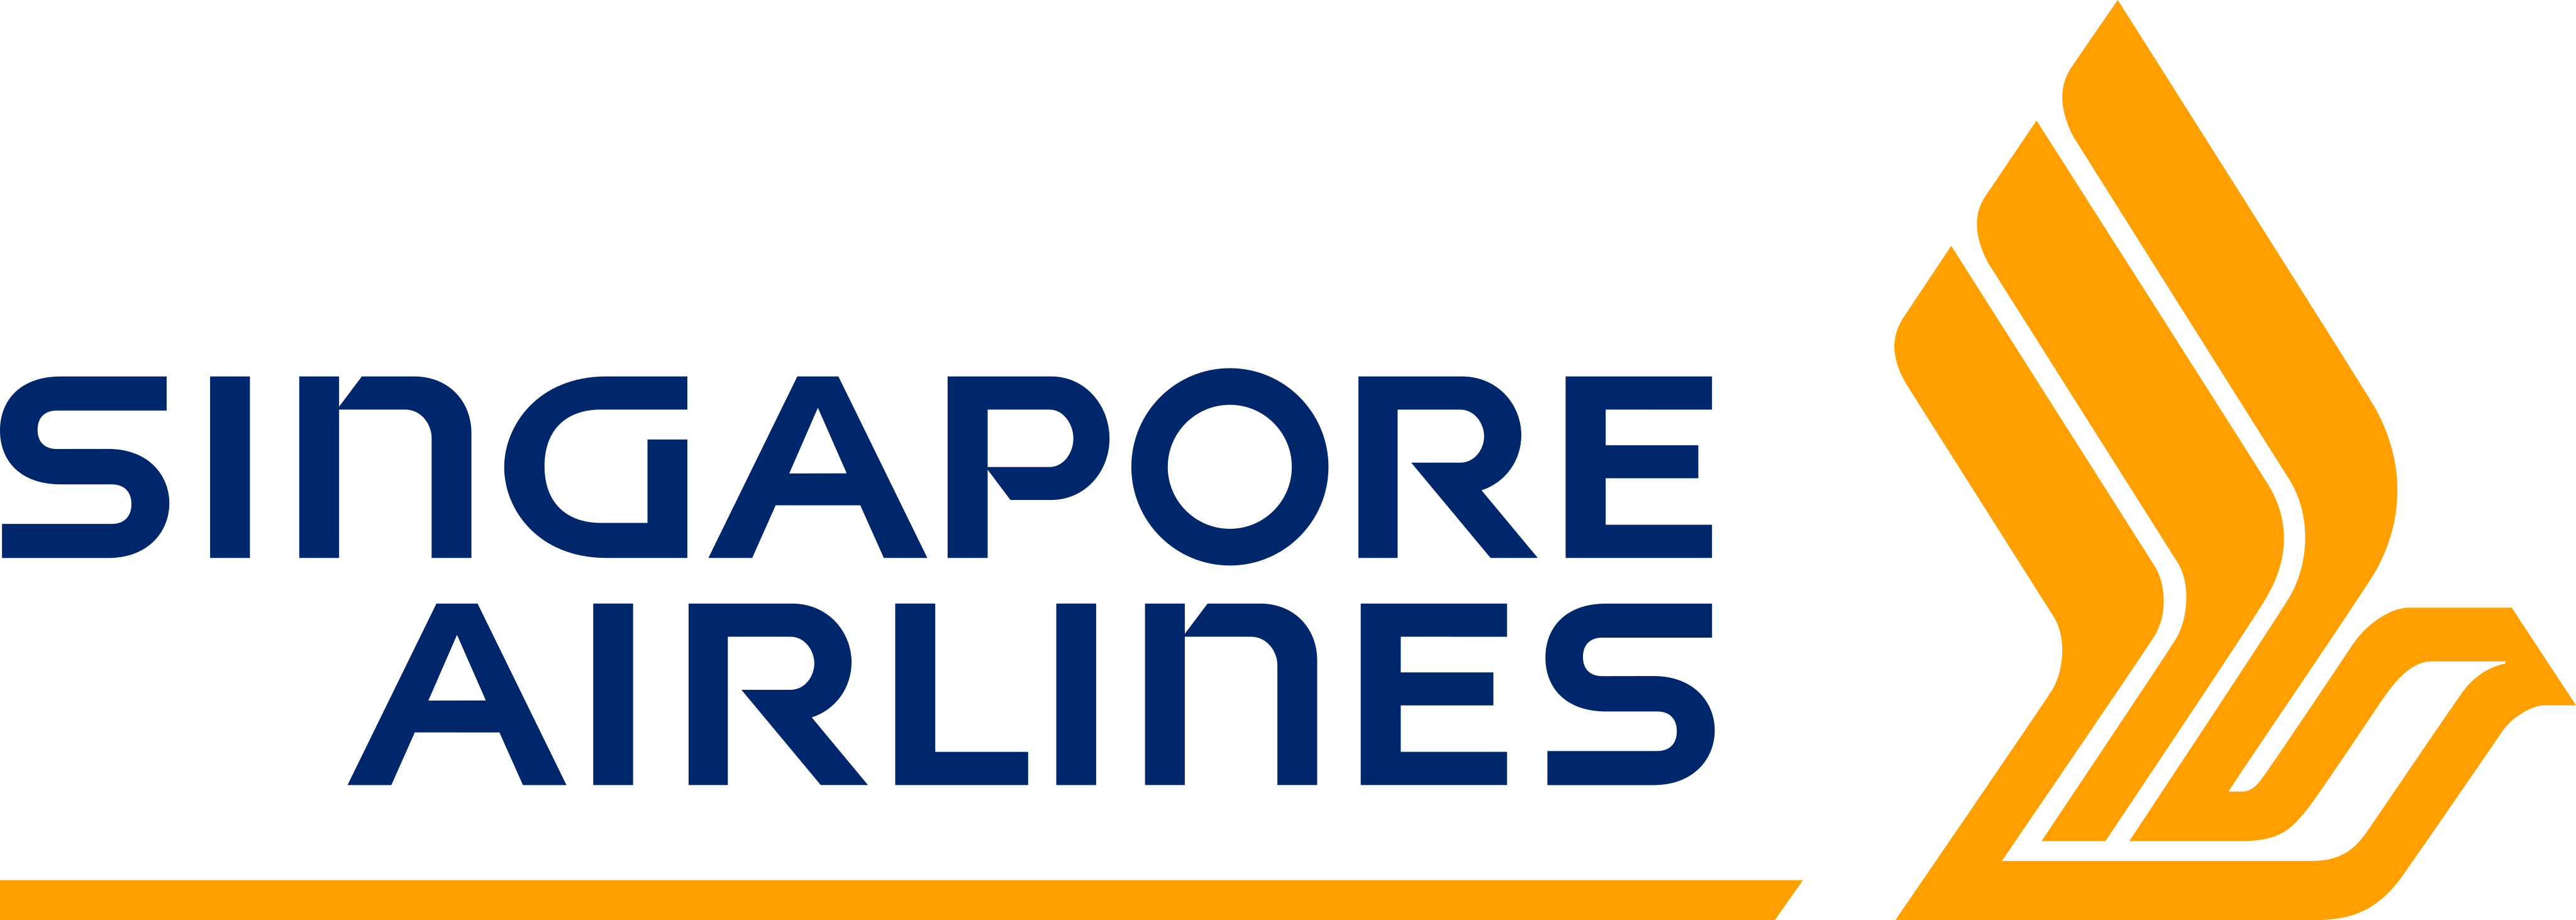 Singapore Airlines Logo.